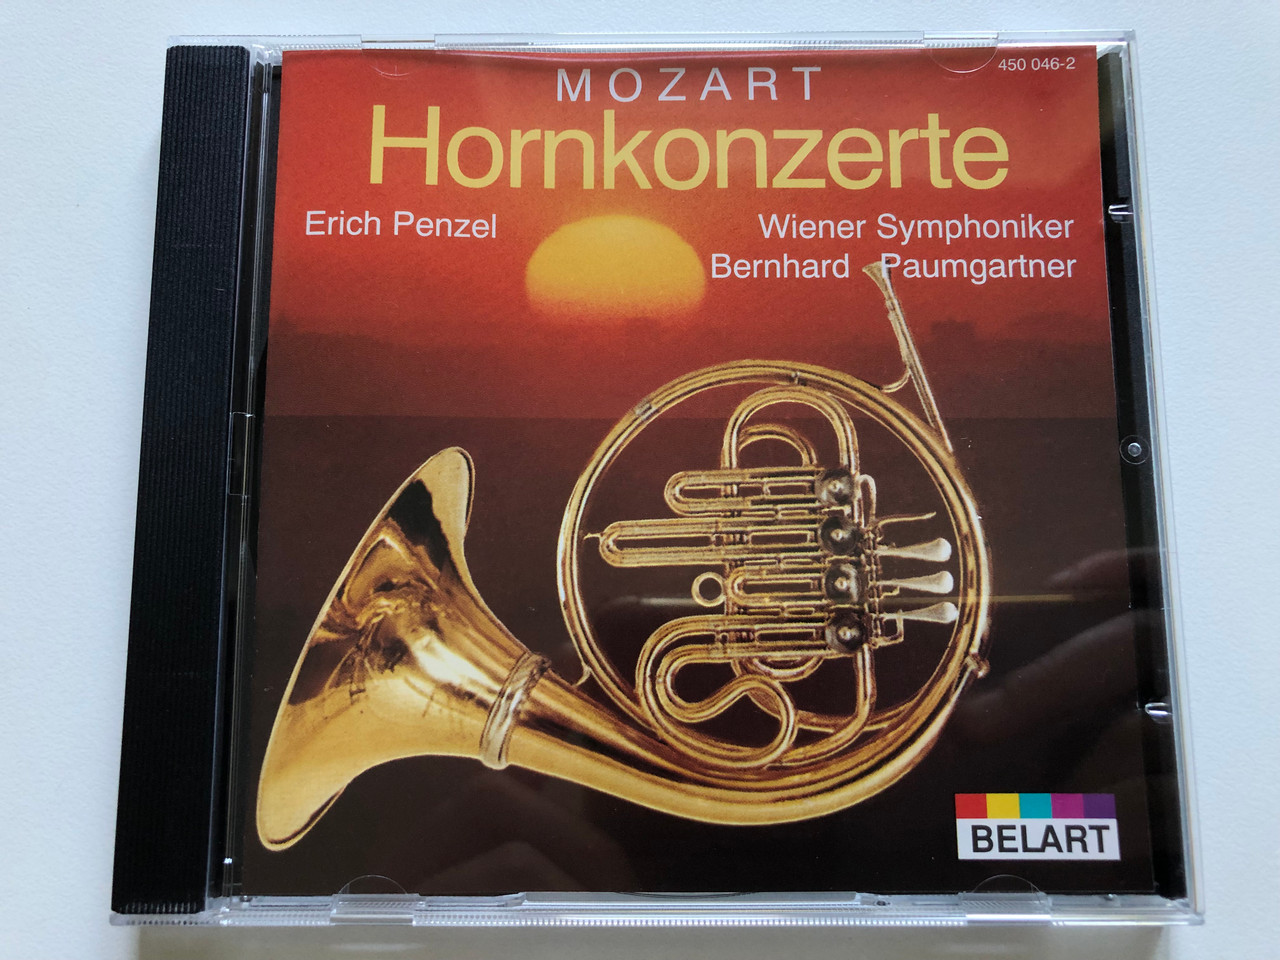 Mozart - Hornkonzerte / Erich Penzel, Wiener Symphoniker, Bernhard  Paumgartner / Belart Audio CD Stereo / 450 046-2 - bibleinmylanguage